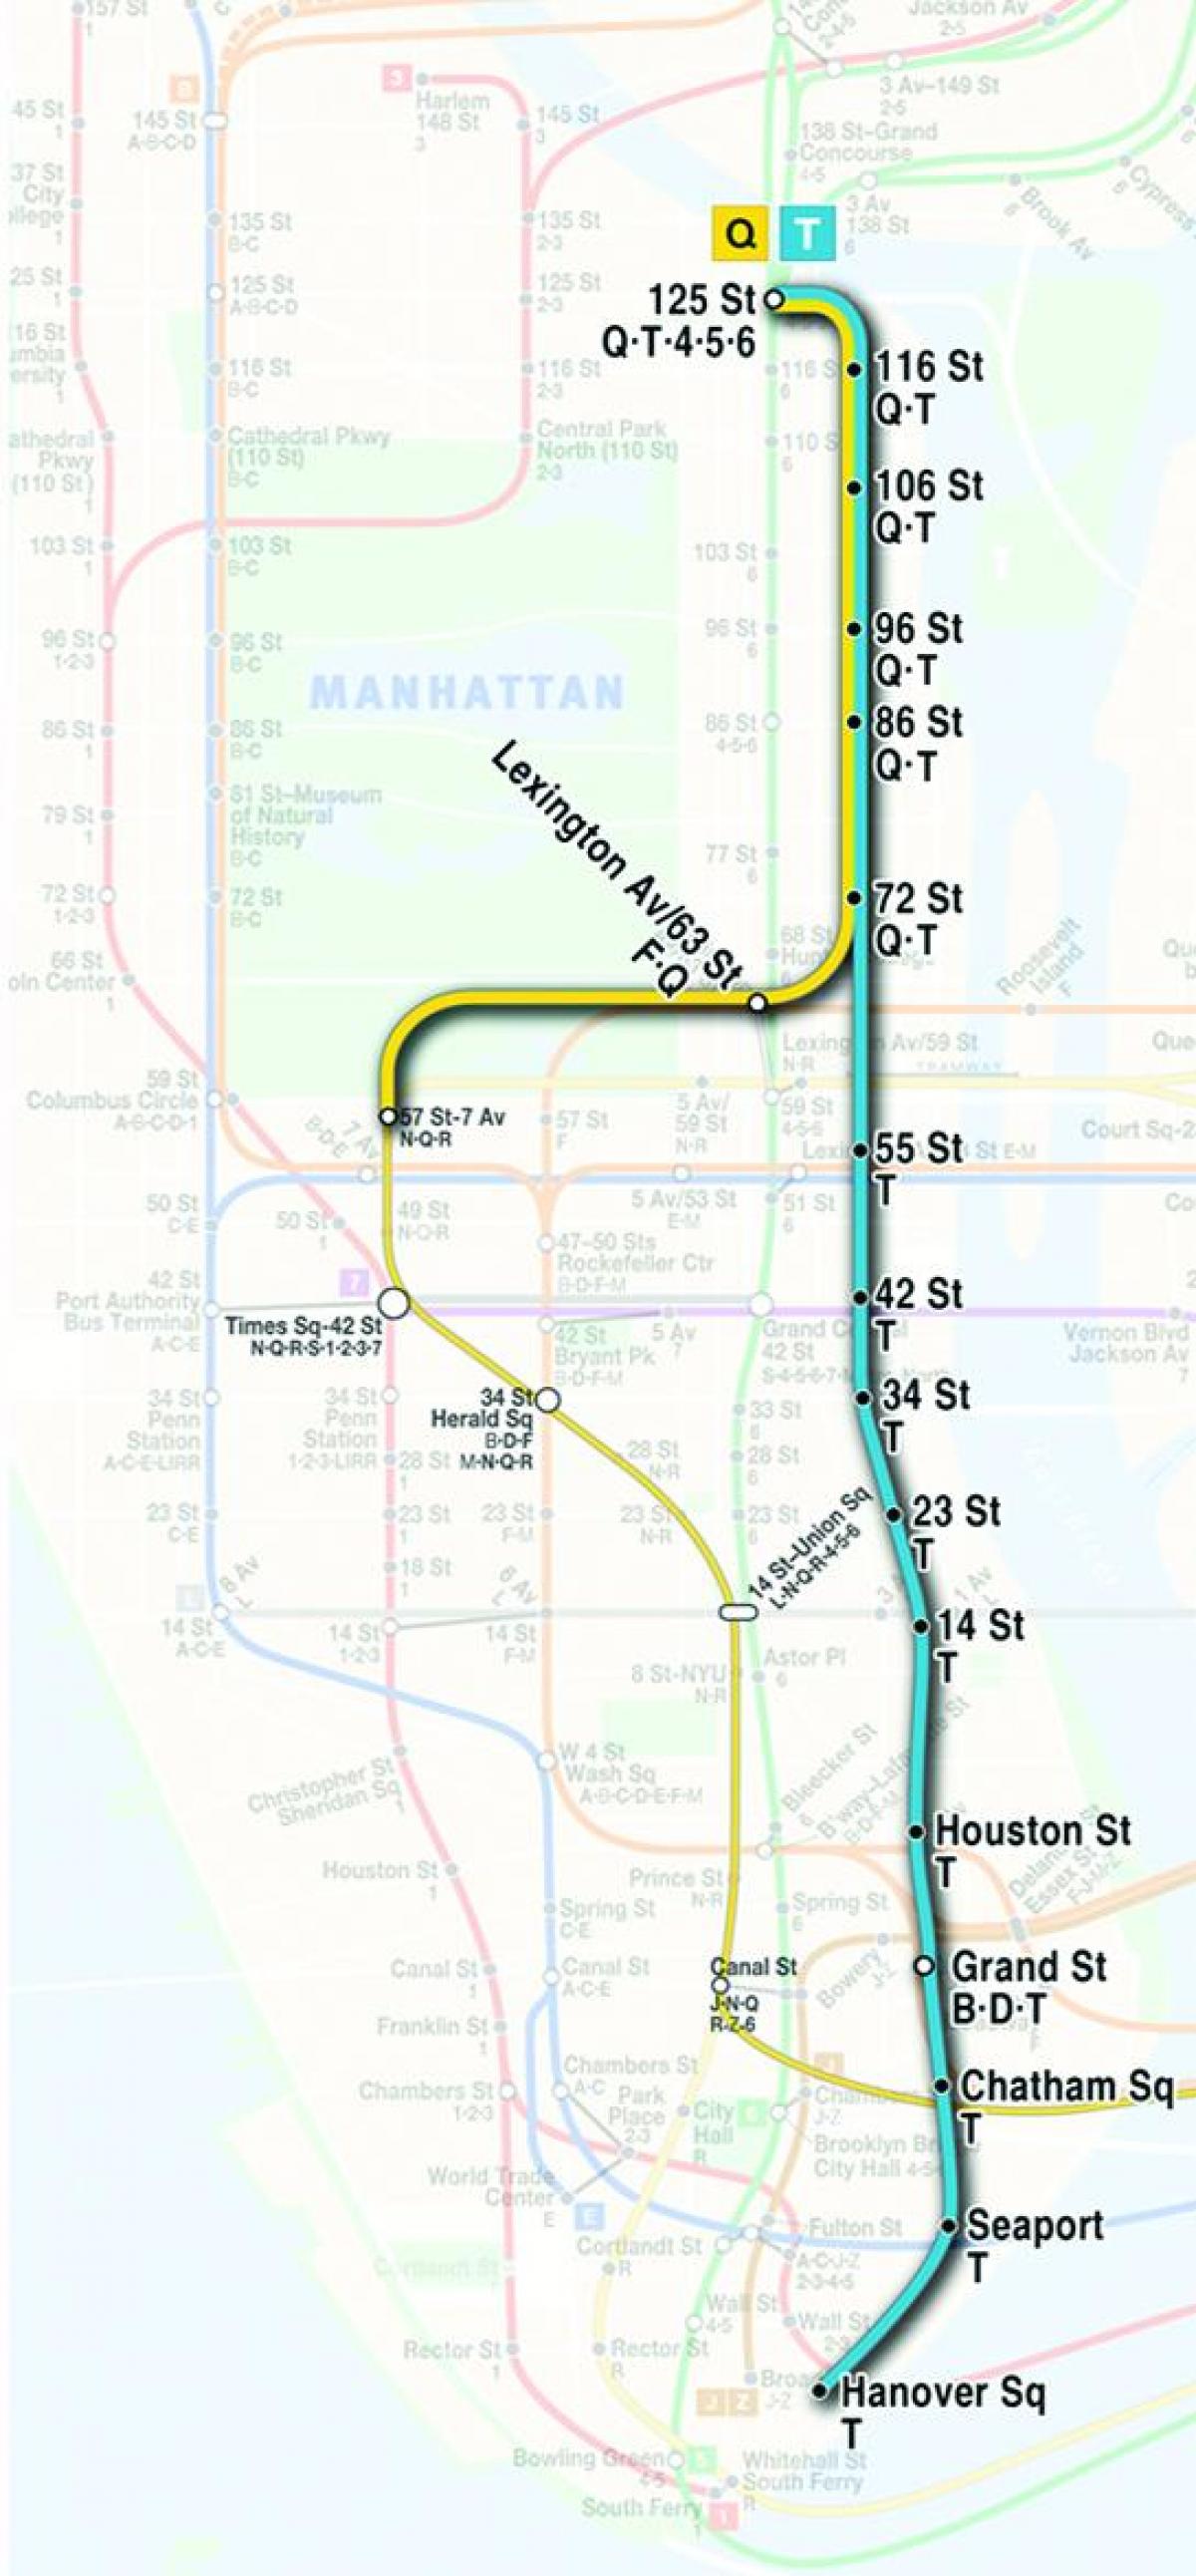 Karte second avenue U-Bahn